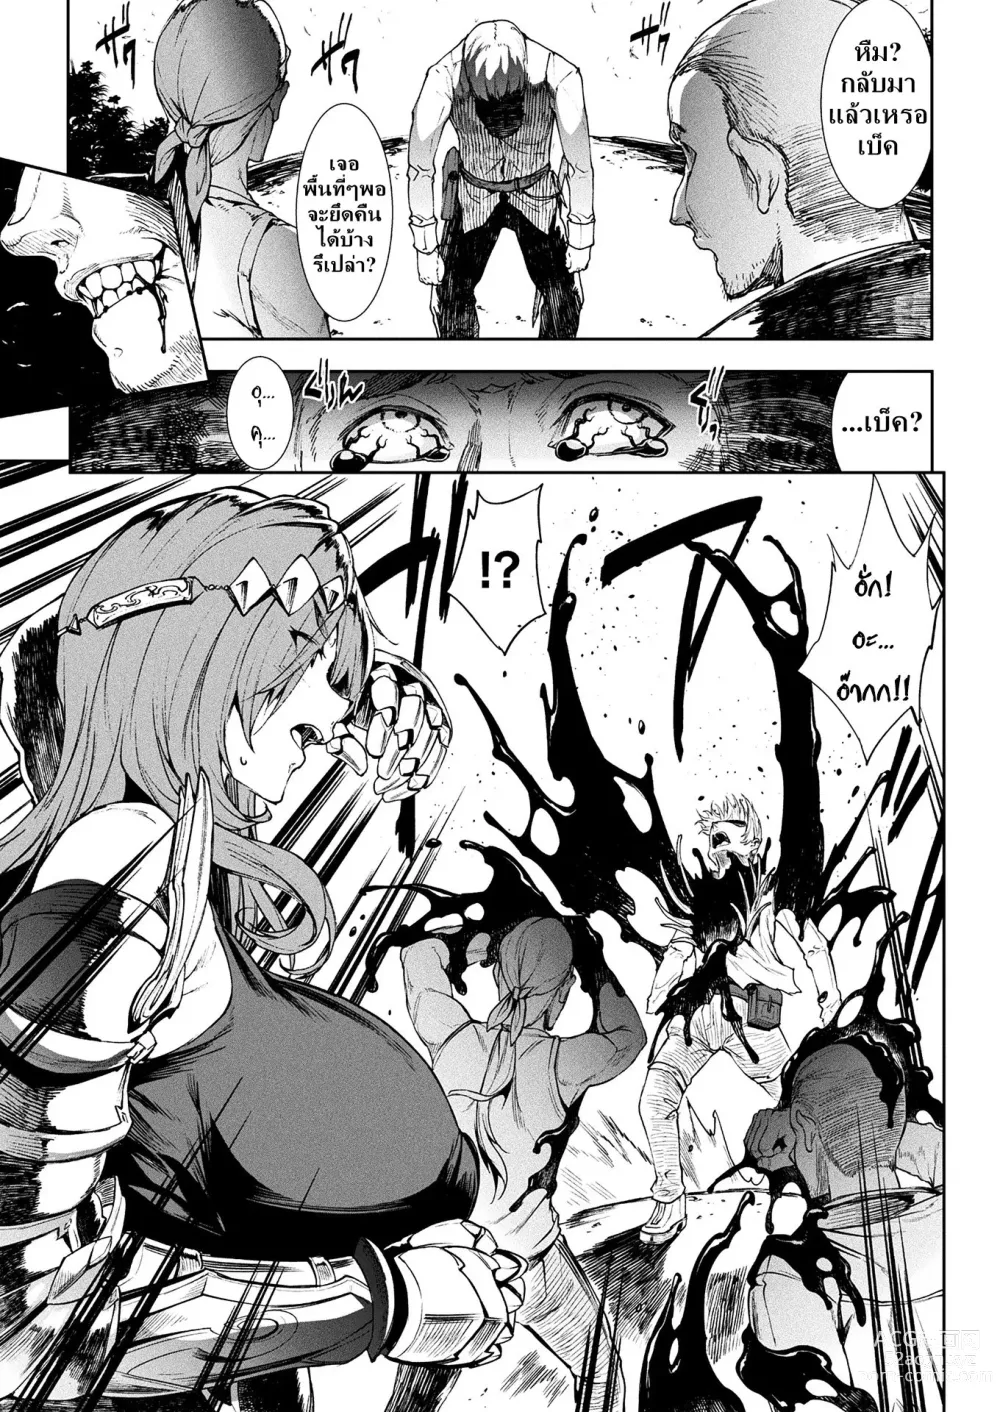 Page 9 of manga Raikou Shinki Igis Magia III -PANDRA saga 3rd ignition-